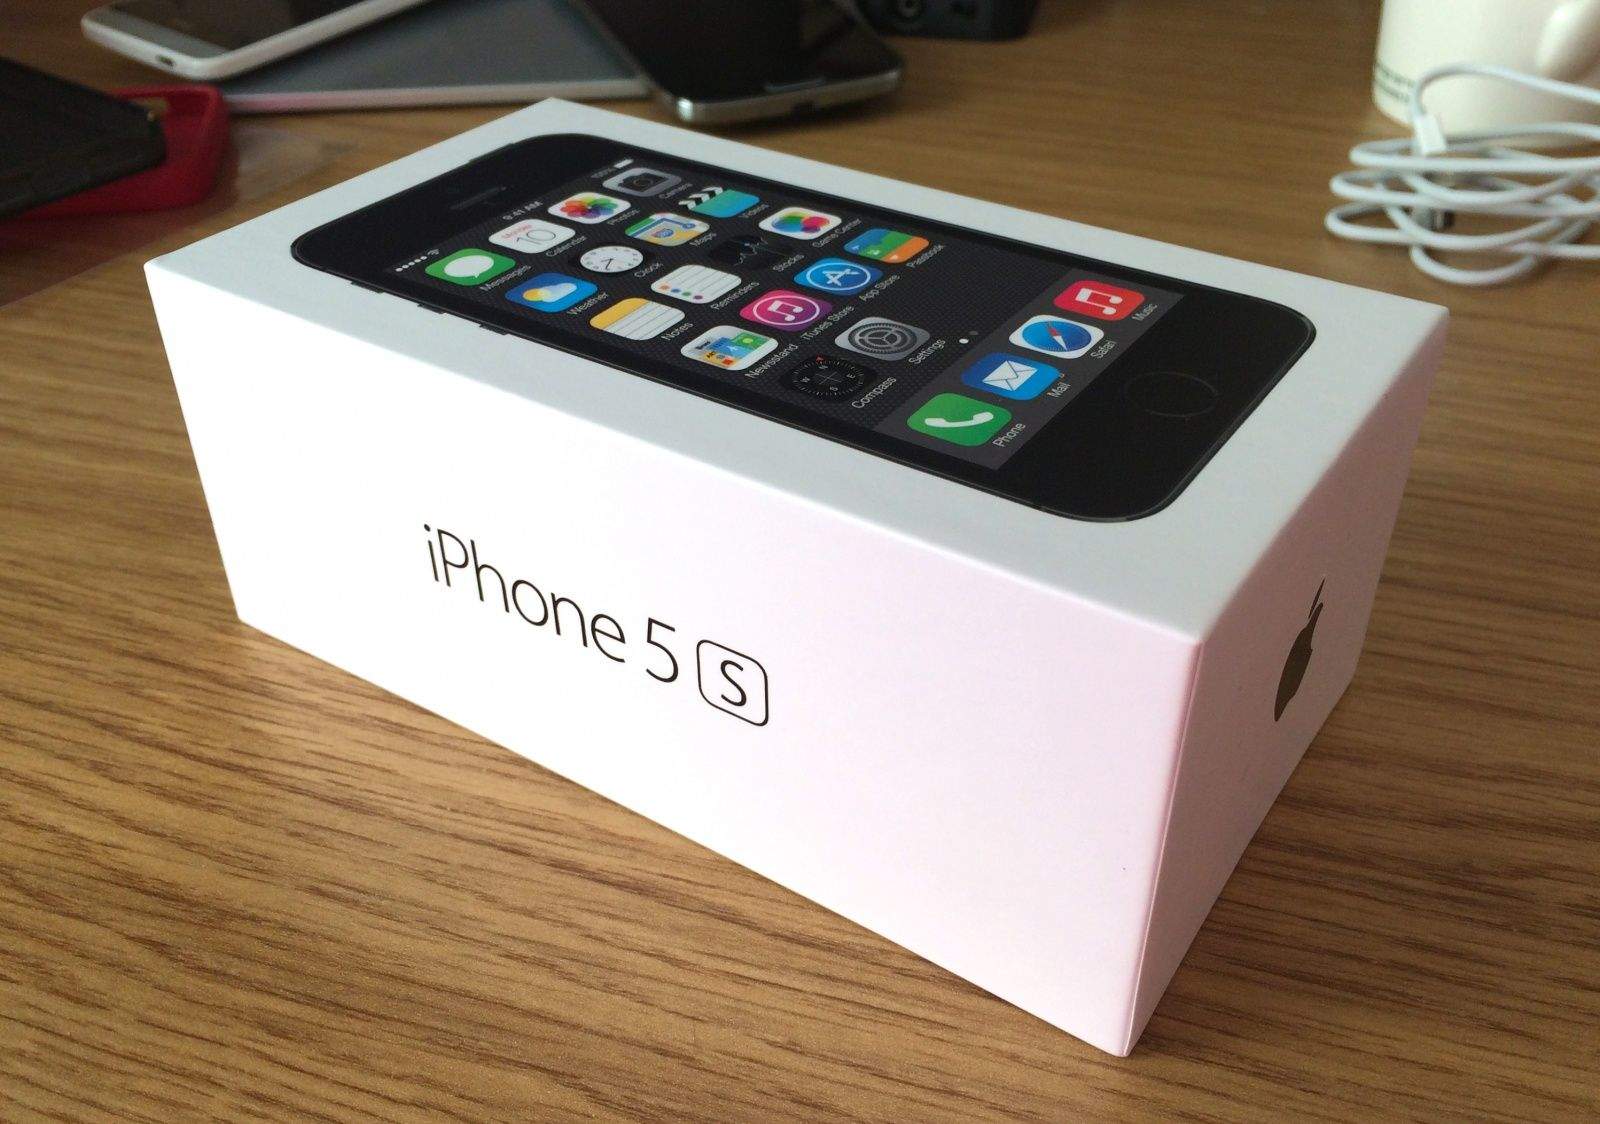 iPhone-5s-box-gray